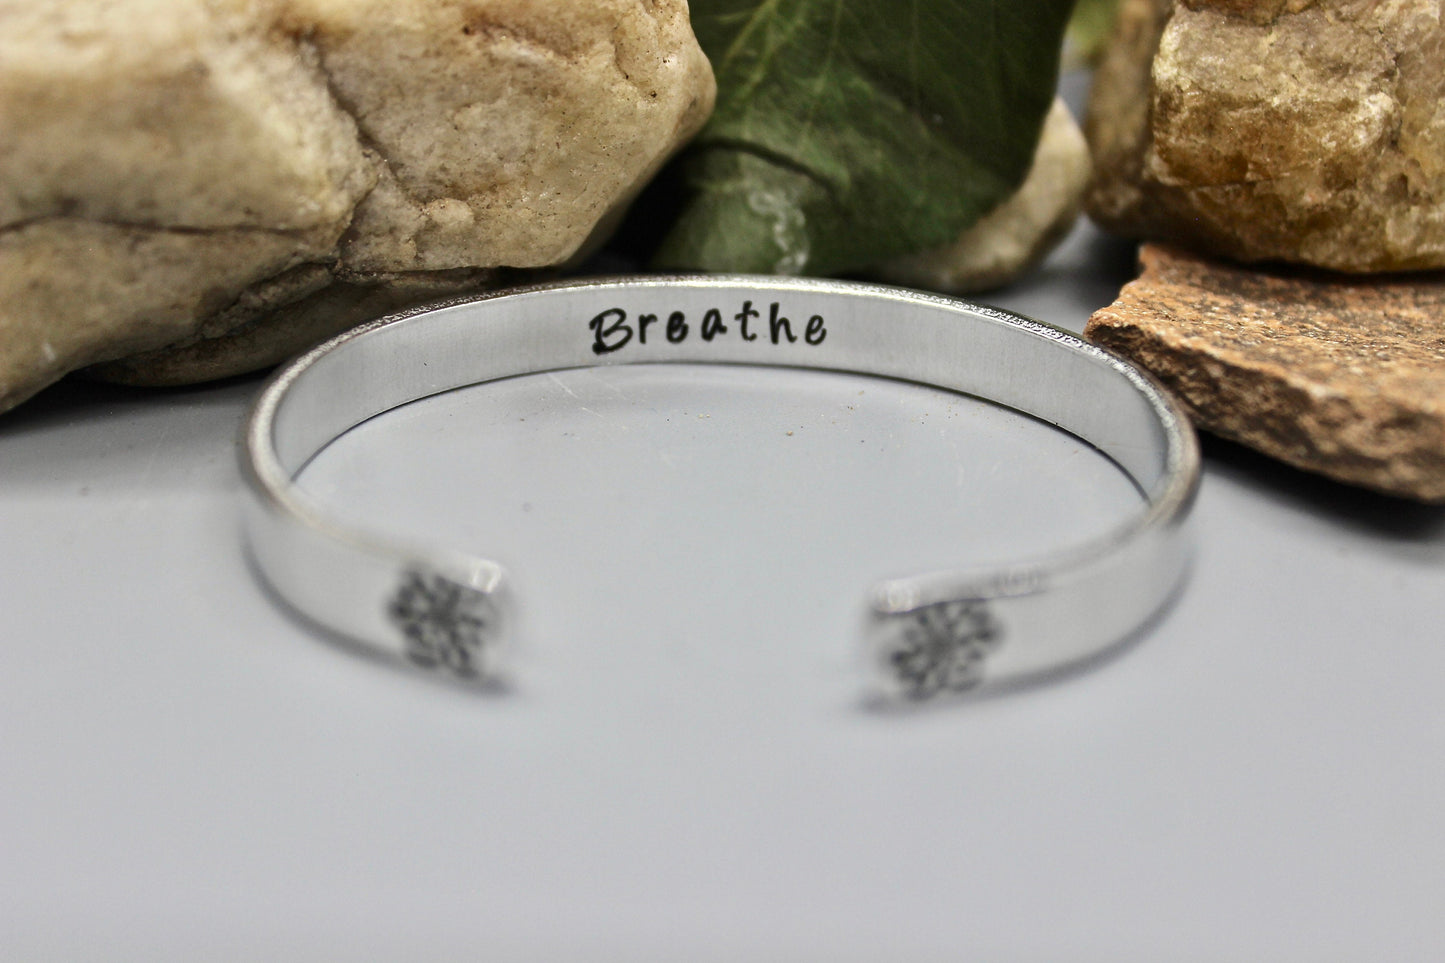 Breathe Bangle Bracelet